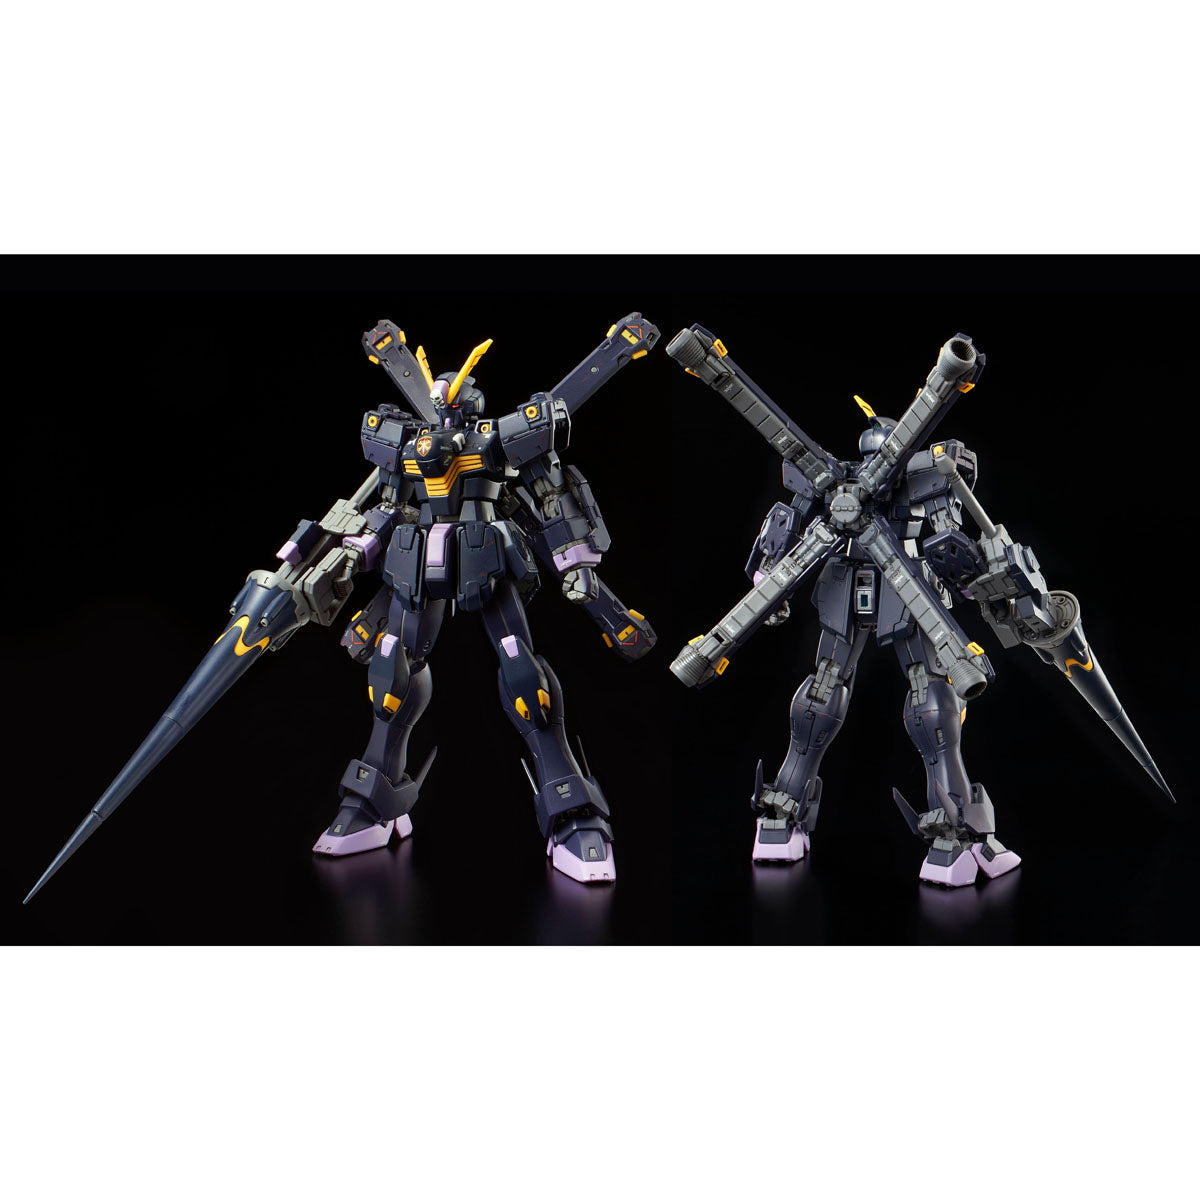 Bandai 5059053 RG XM-X2 Crossbone Gundam X-2 Premium Bandai Limited